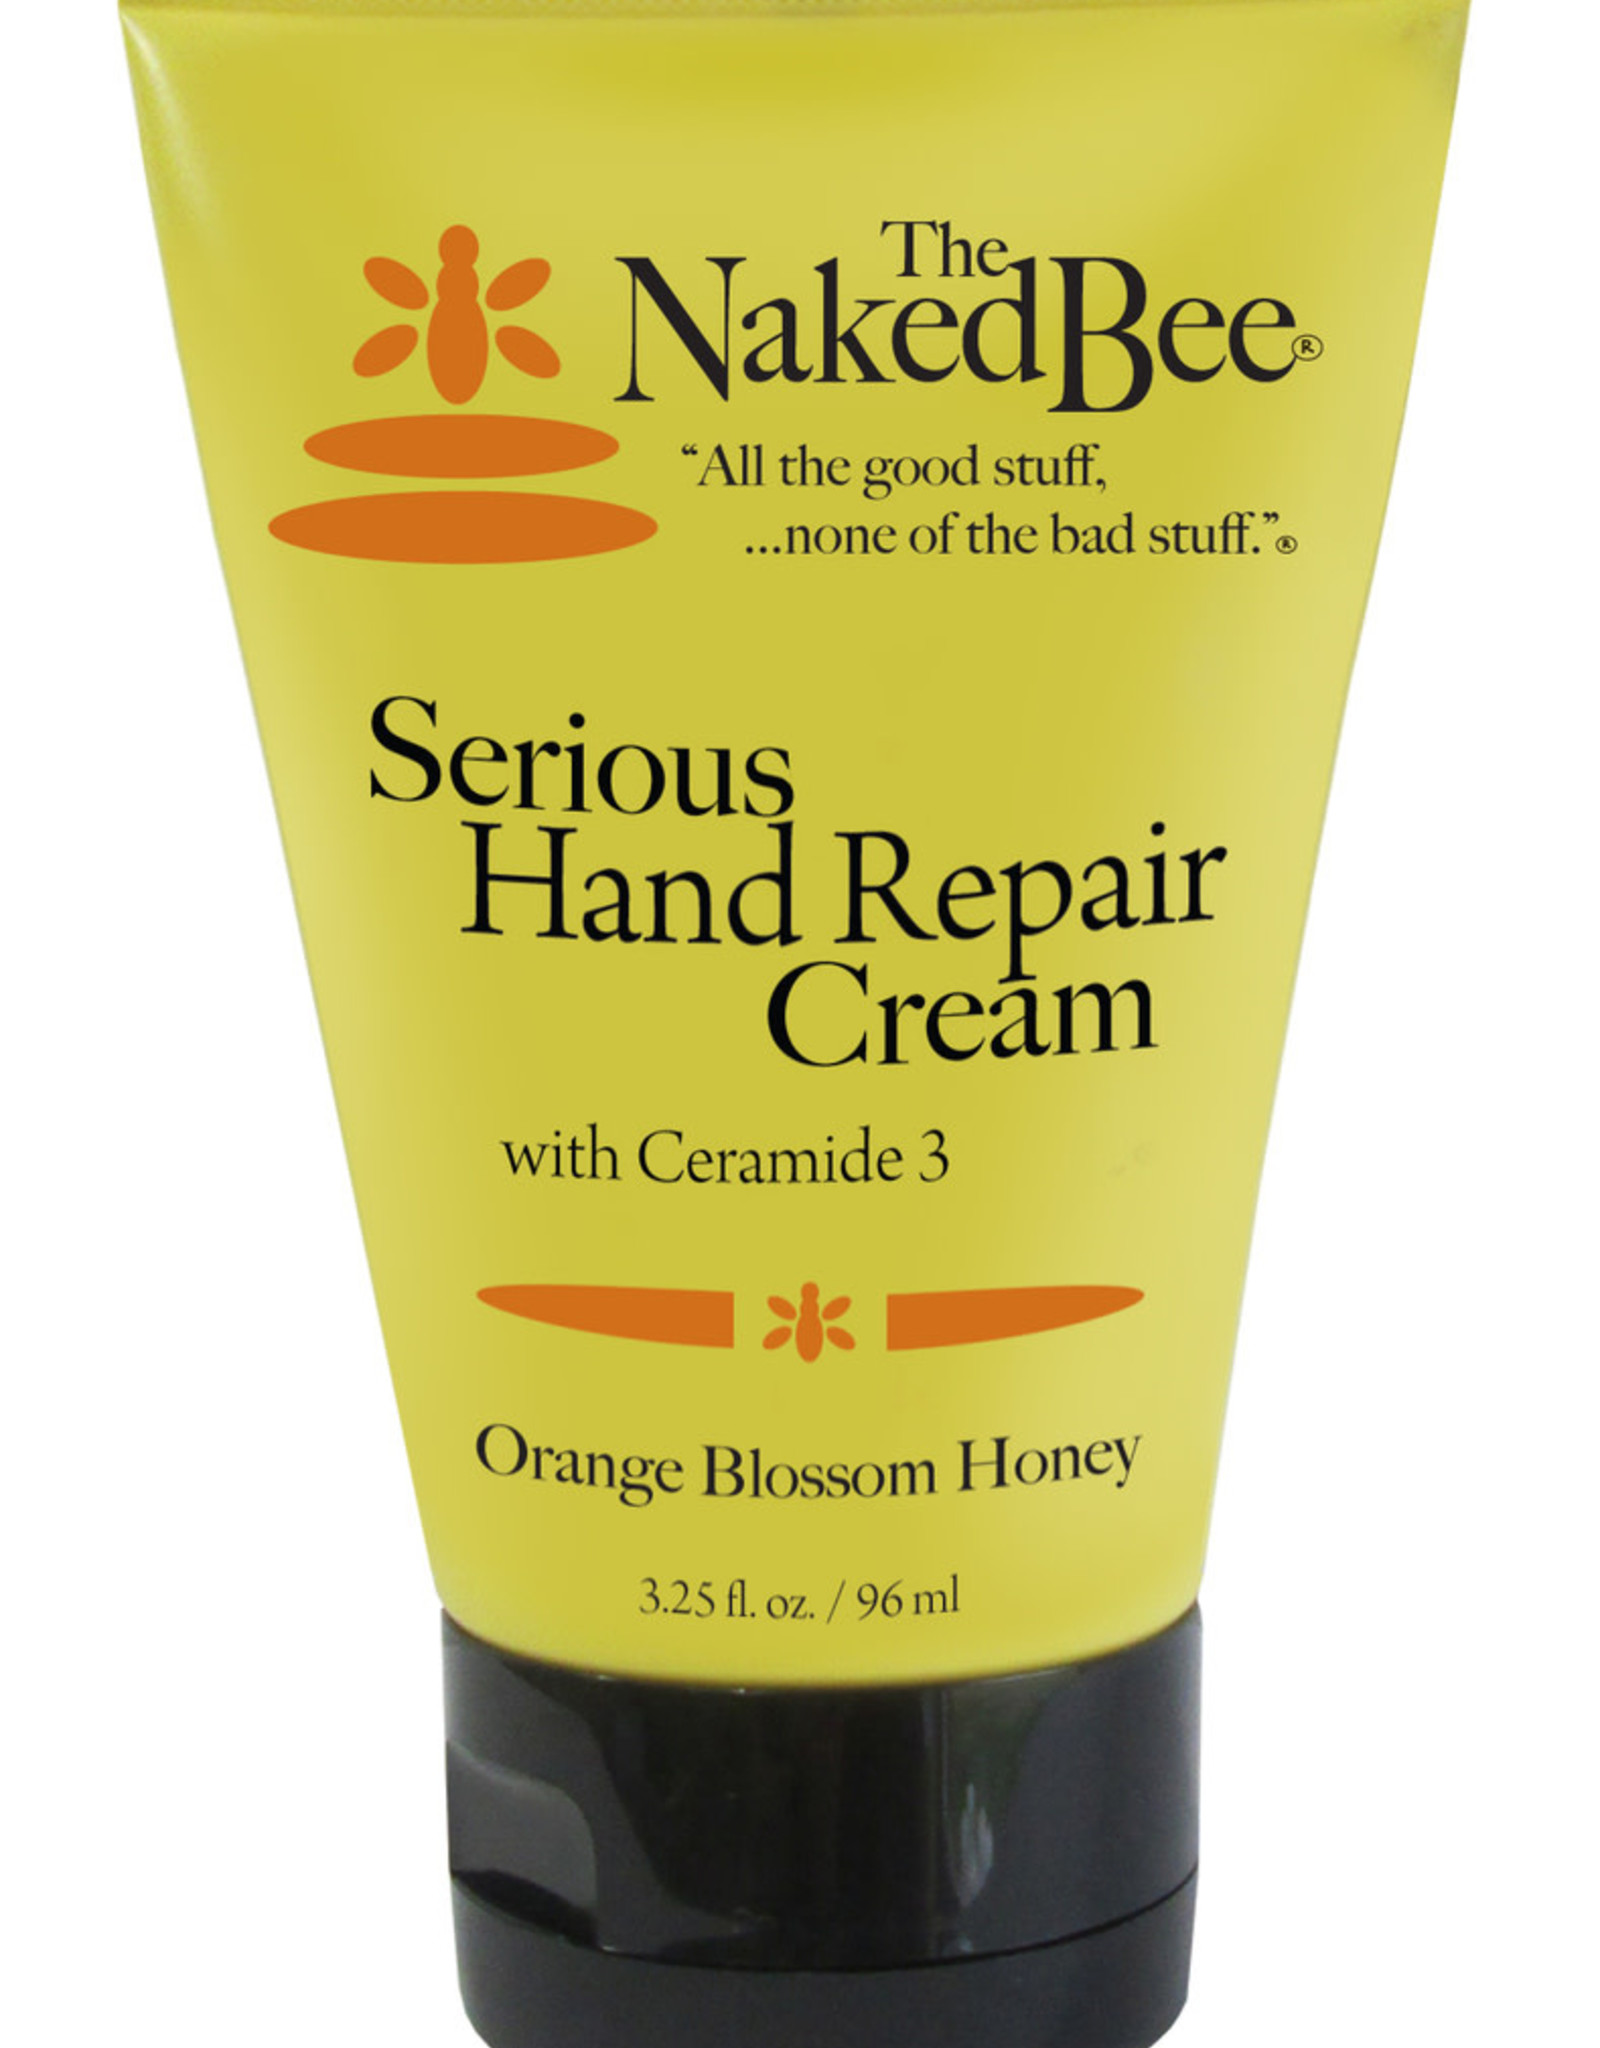 The Naked Bee Naked Bee 3.25 oz. Orange Blossom Honey Serious Hand Repair Cream